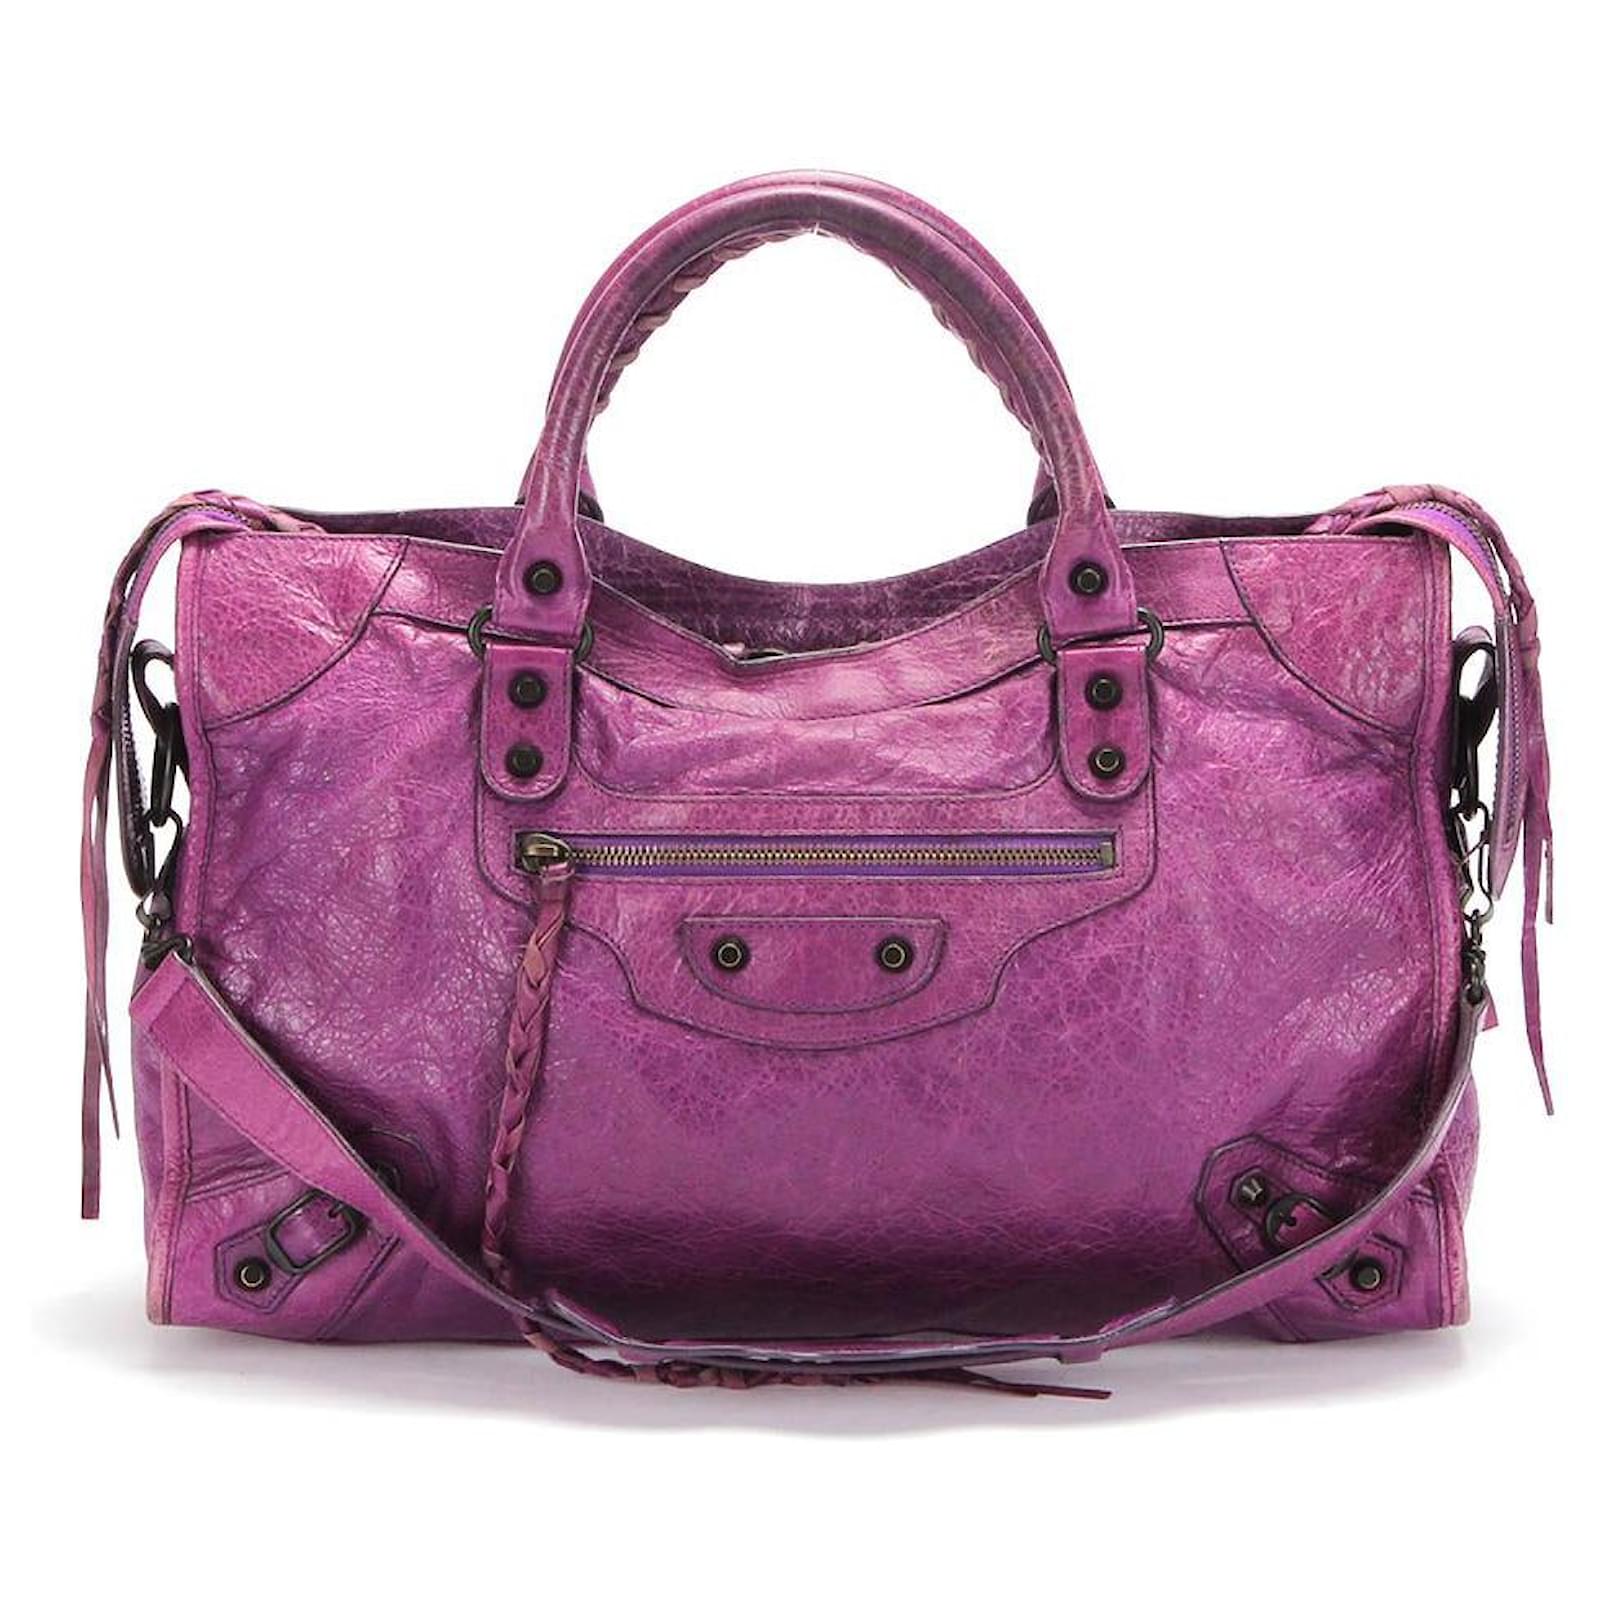 Balenciaga the City 2 Way Shoulder Bag 115748 in purple Leather